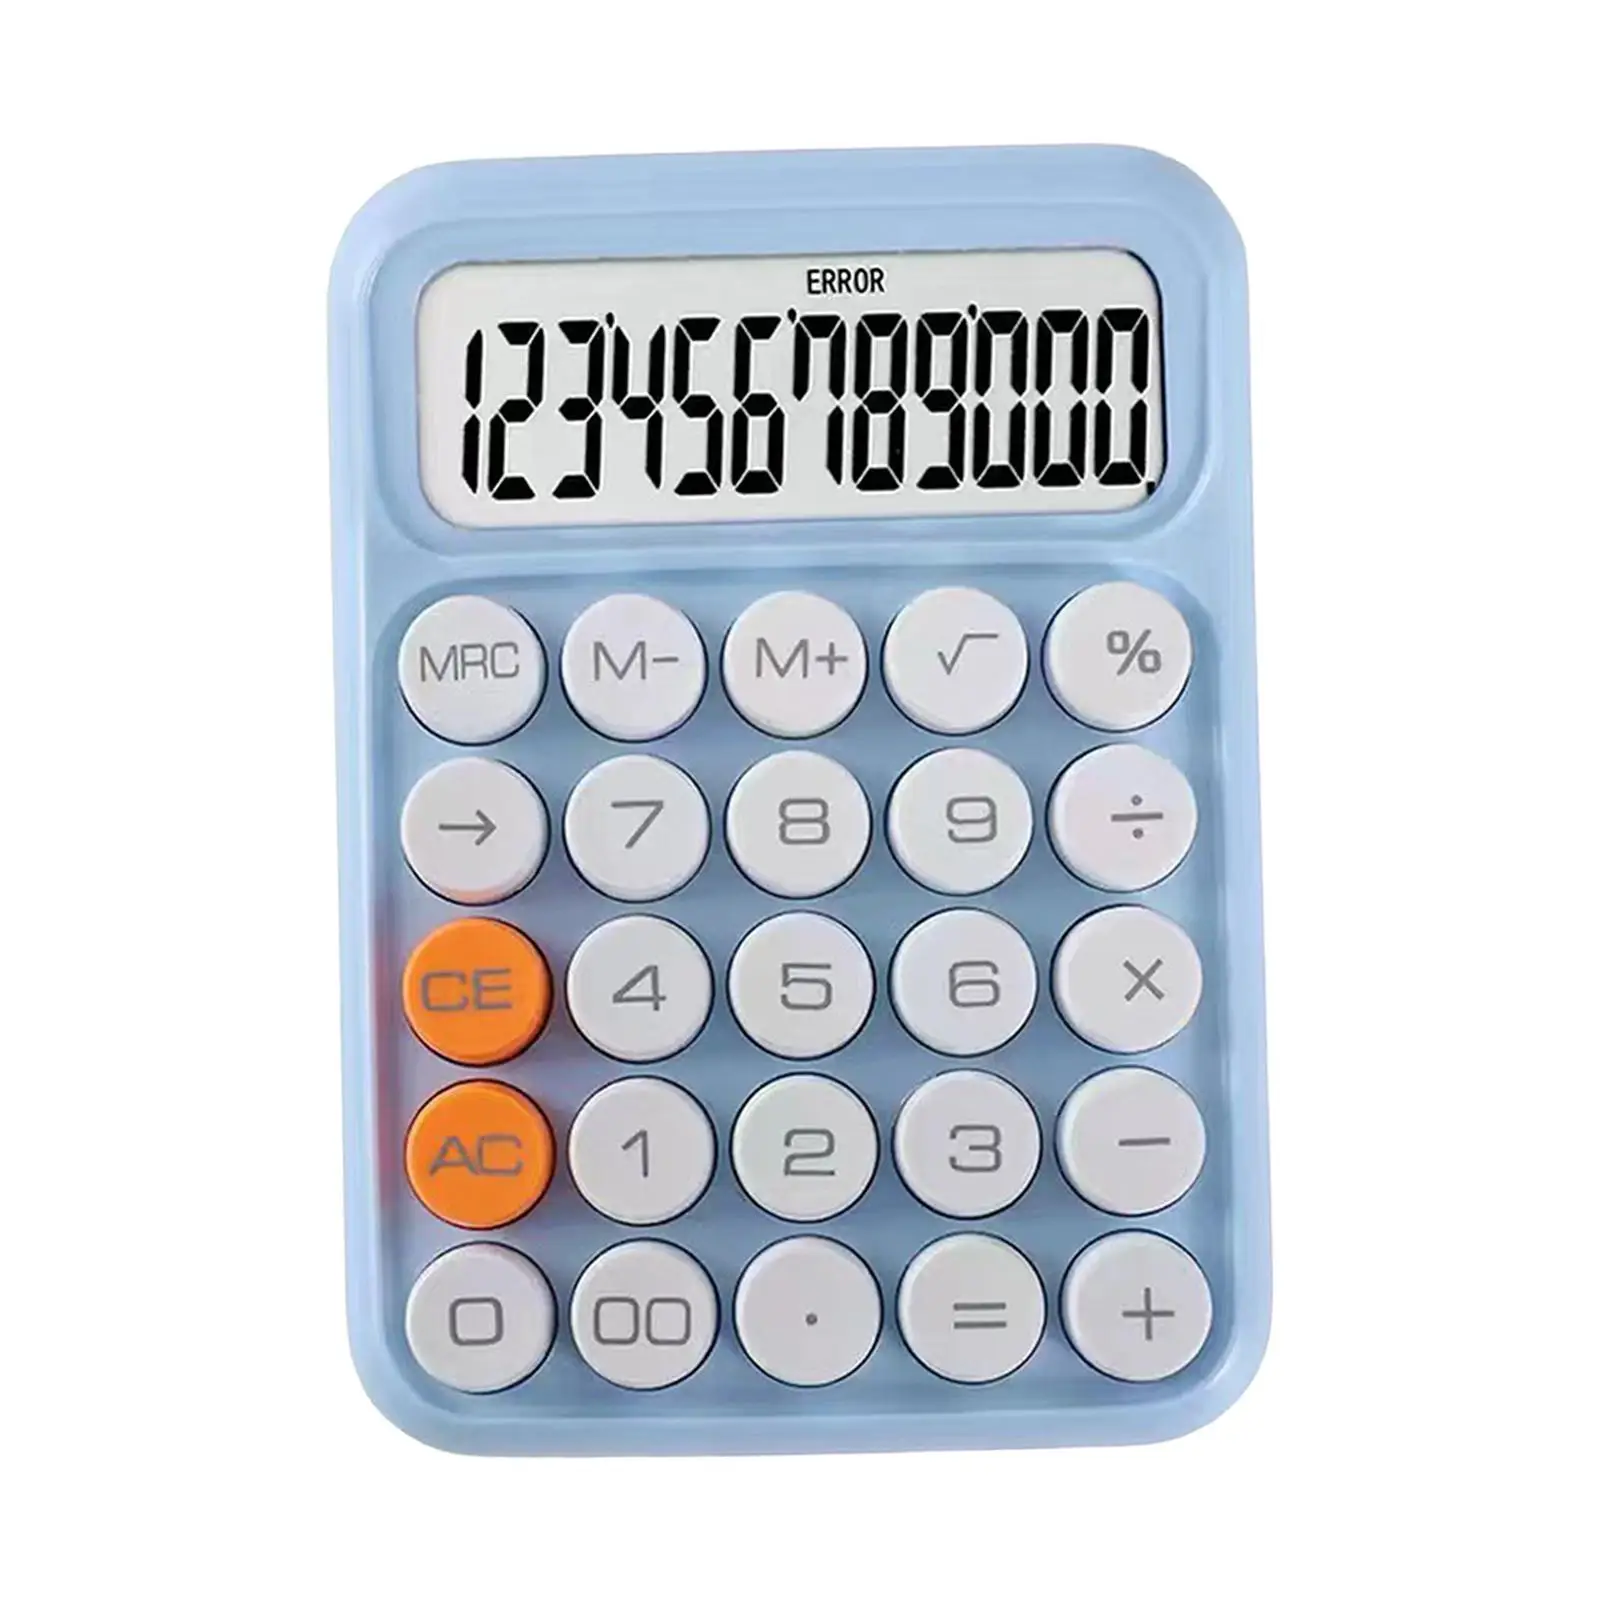 12 Digit Desktop Calculator Cute Pocket Basic Calculator Standard Function Desktop Calculators for Home Office Shop Business Use